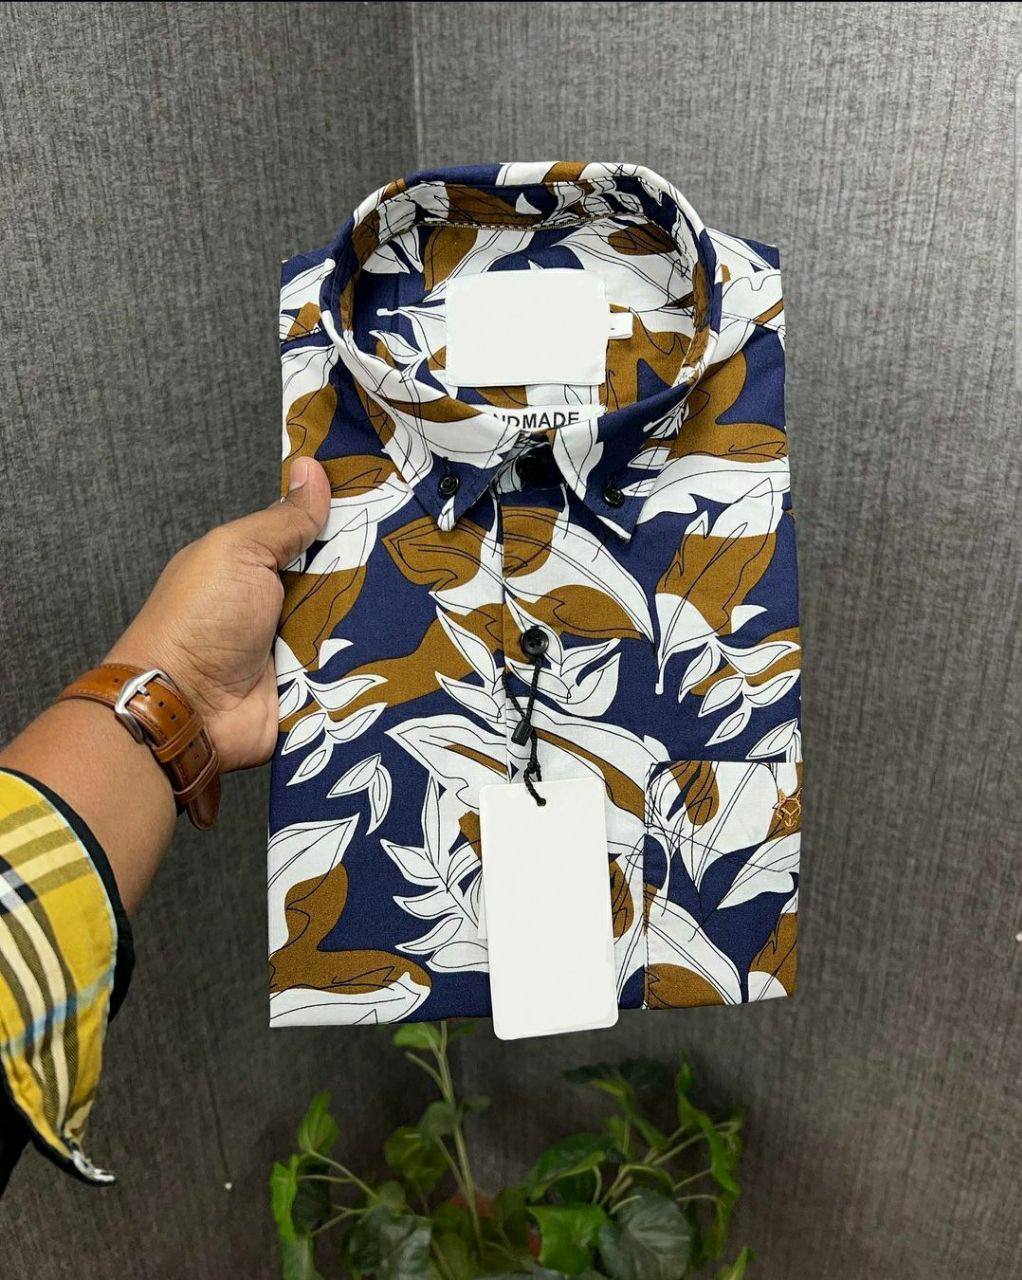 Export quality printed half sleeve shirt